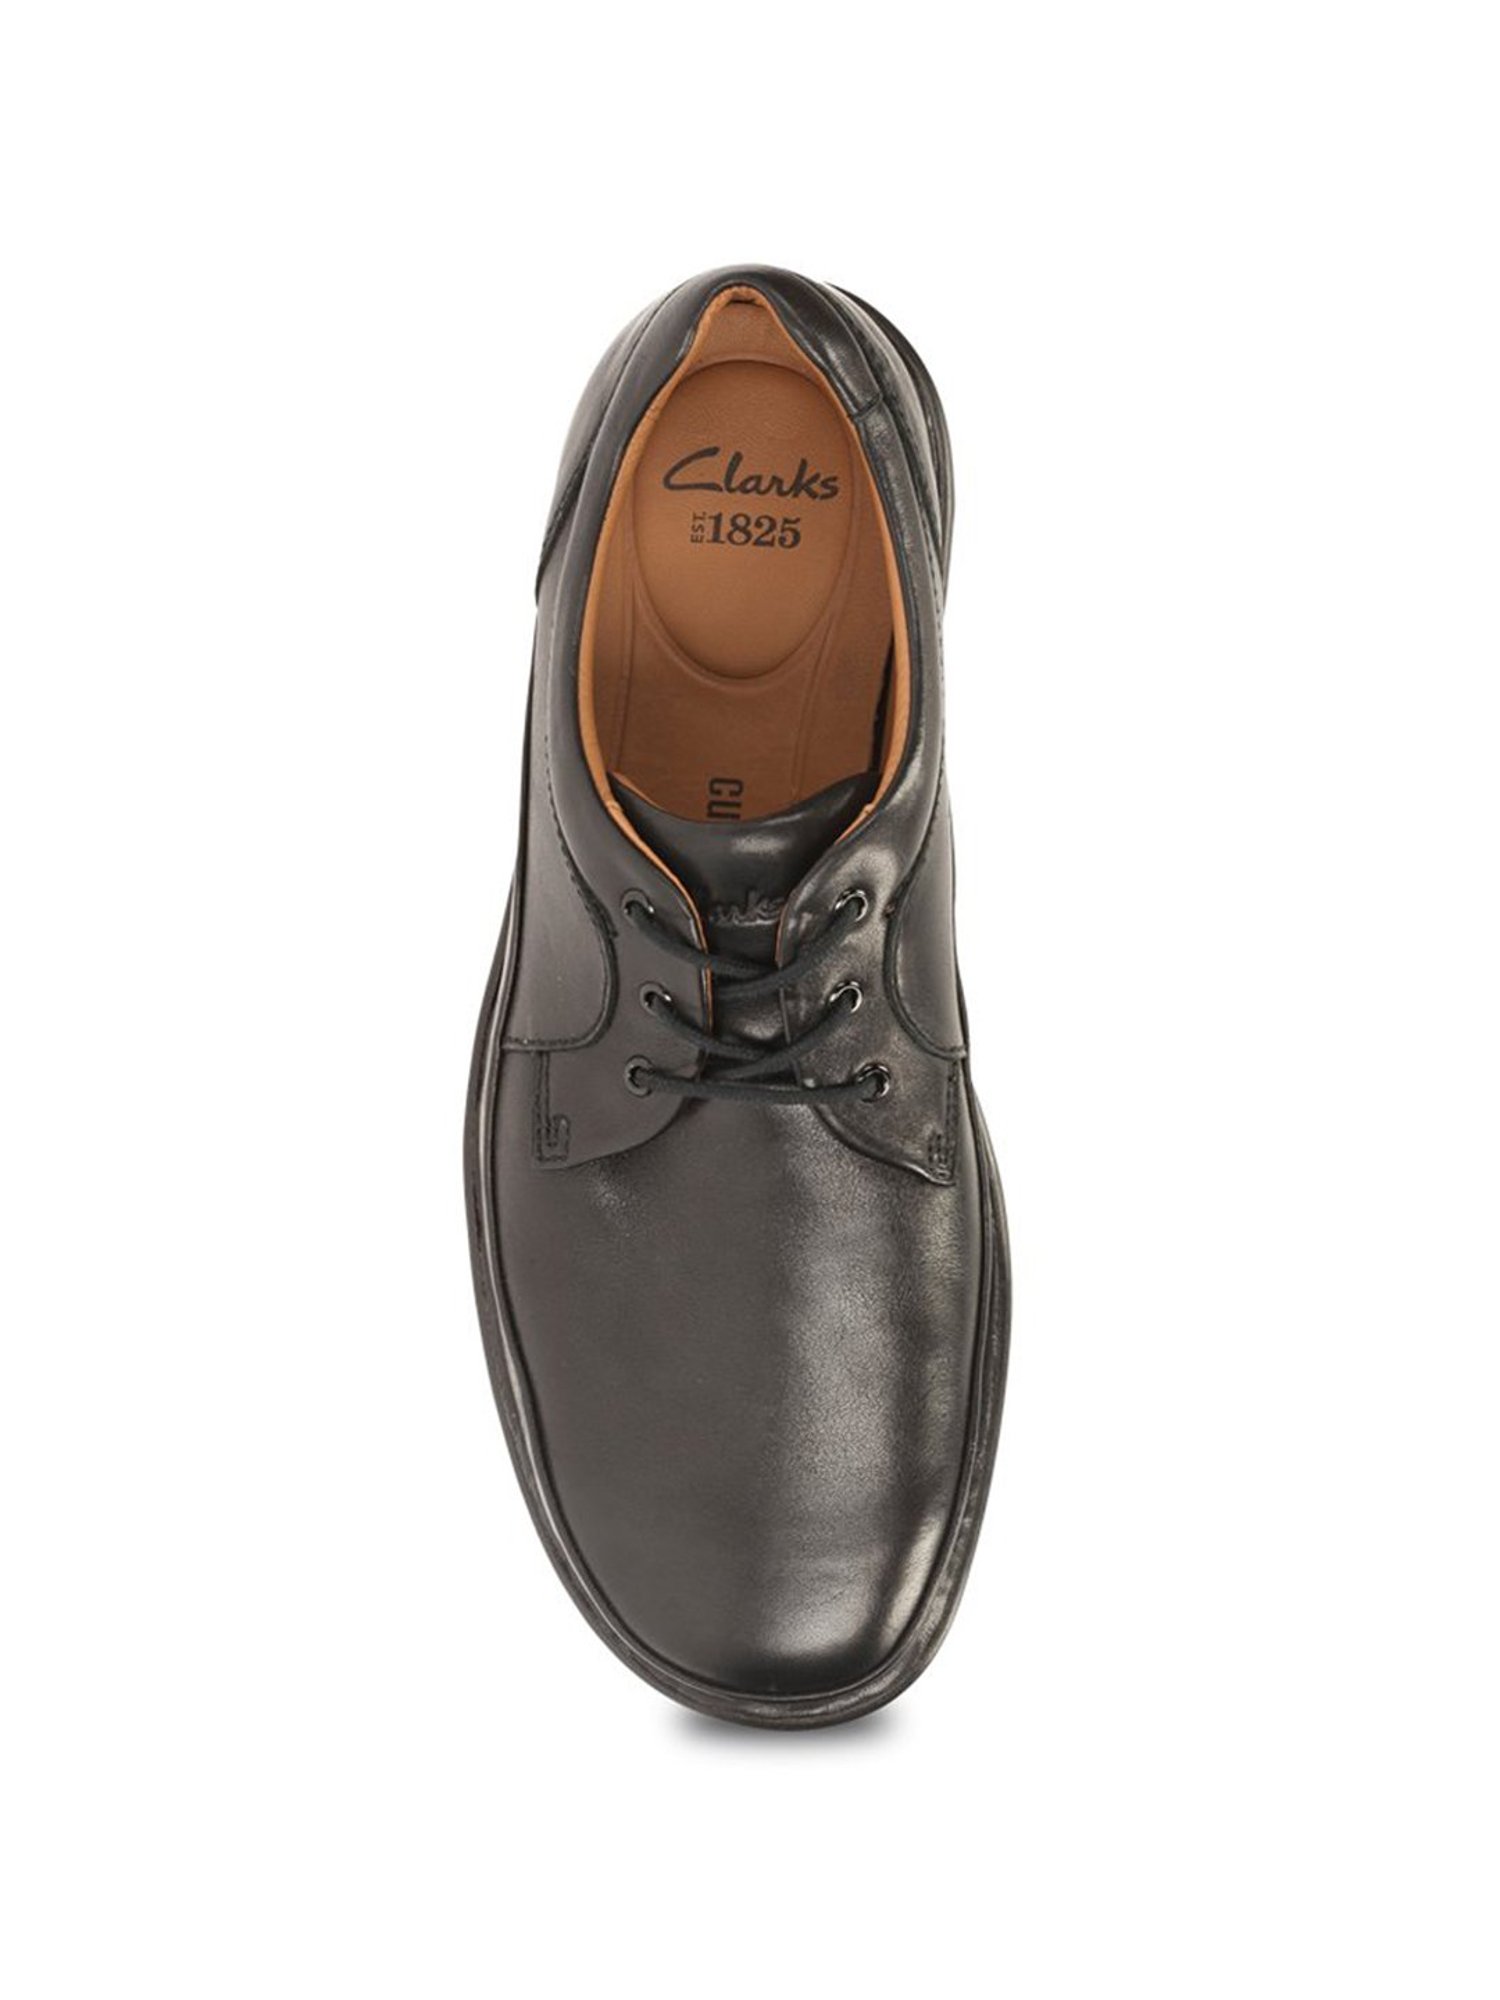 Clarks Butleigh Edge Black Derby Shoes Men at Best Price @ CLiQ